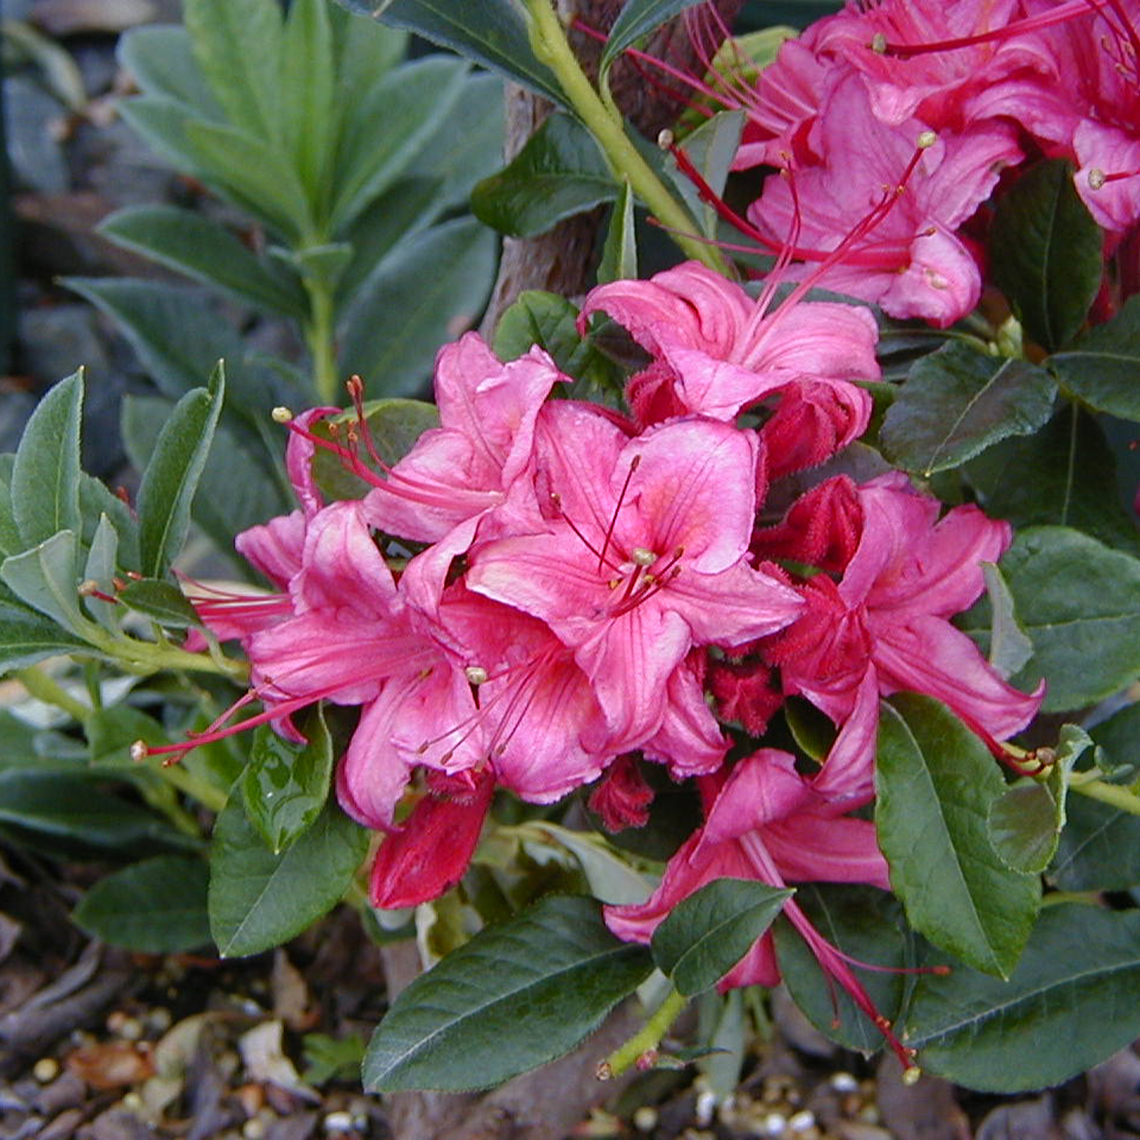 Close up of rich pink Weston's Millenium azalea flowers